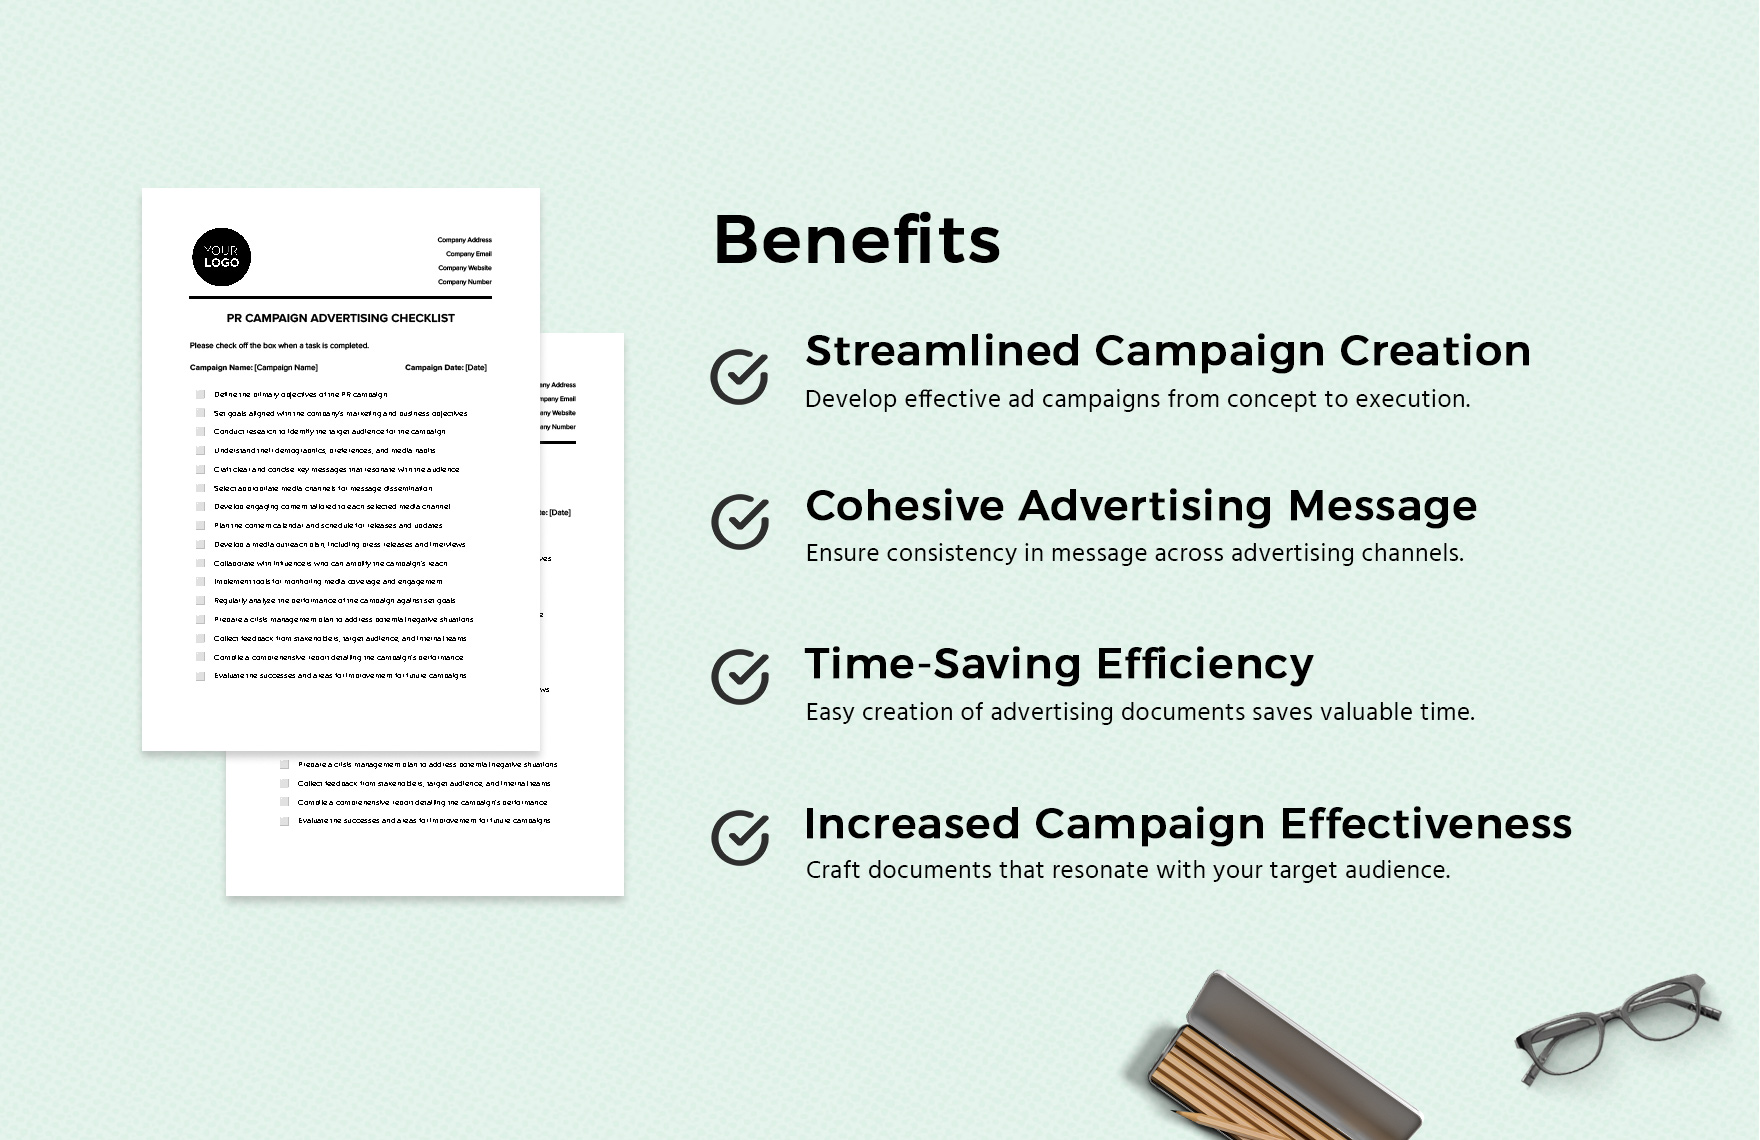 PR Campaign Advertising Checklist Template